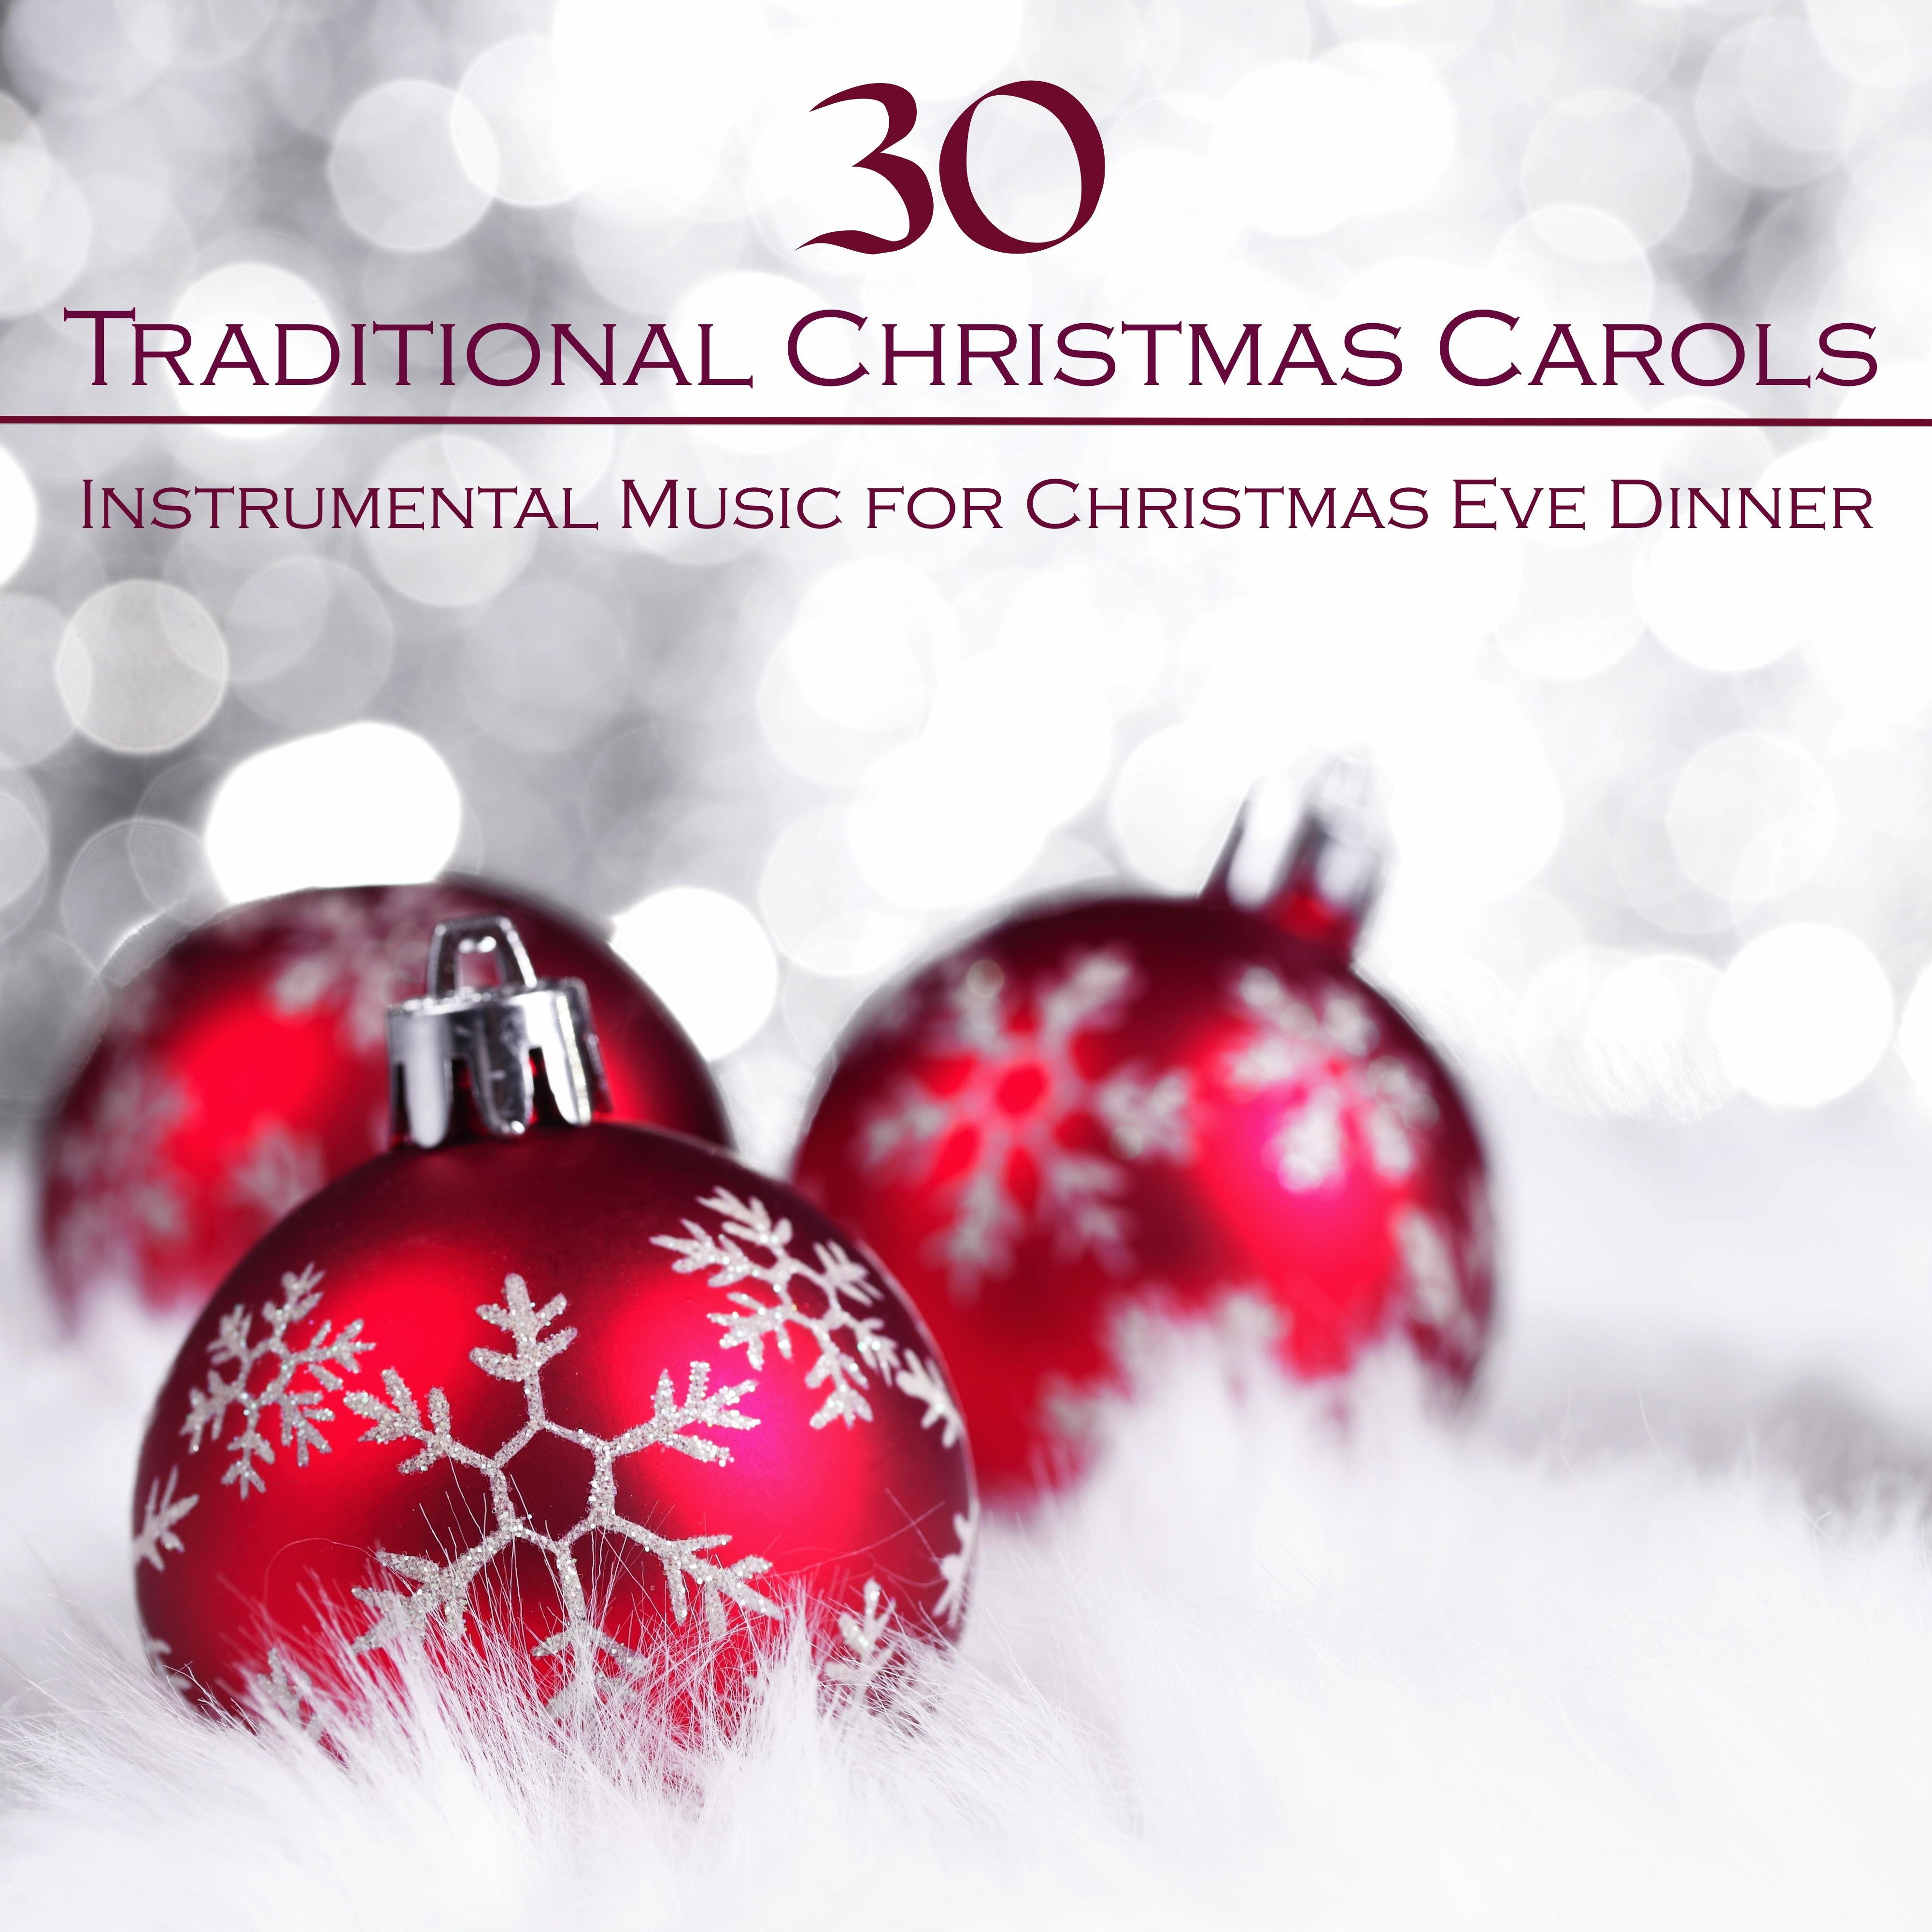 30 Traditional Christmas Carols and Instrumental Music for Christmas Eve Dinner